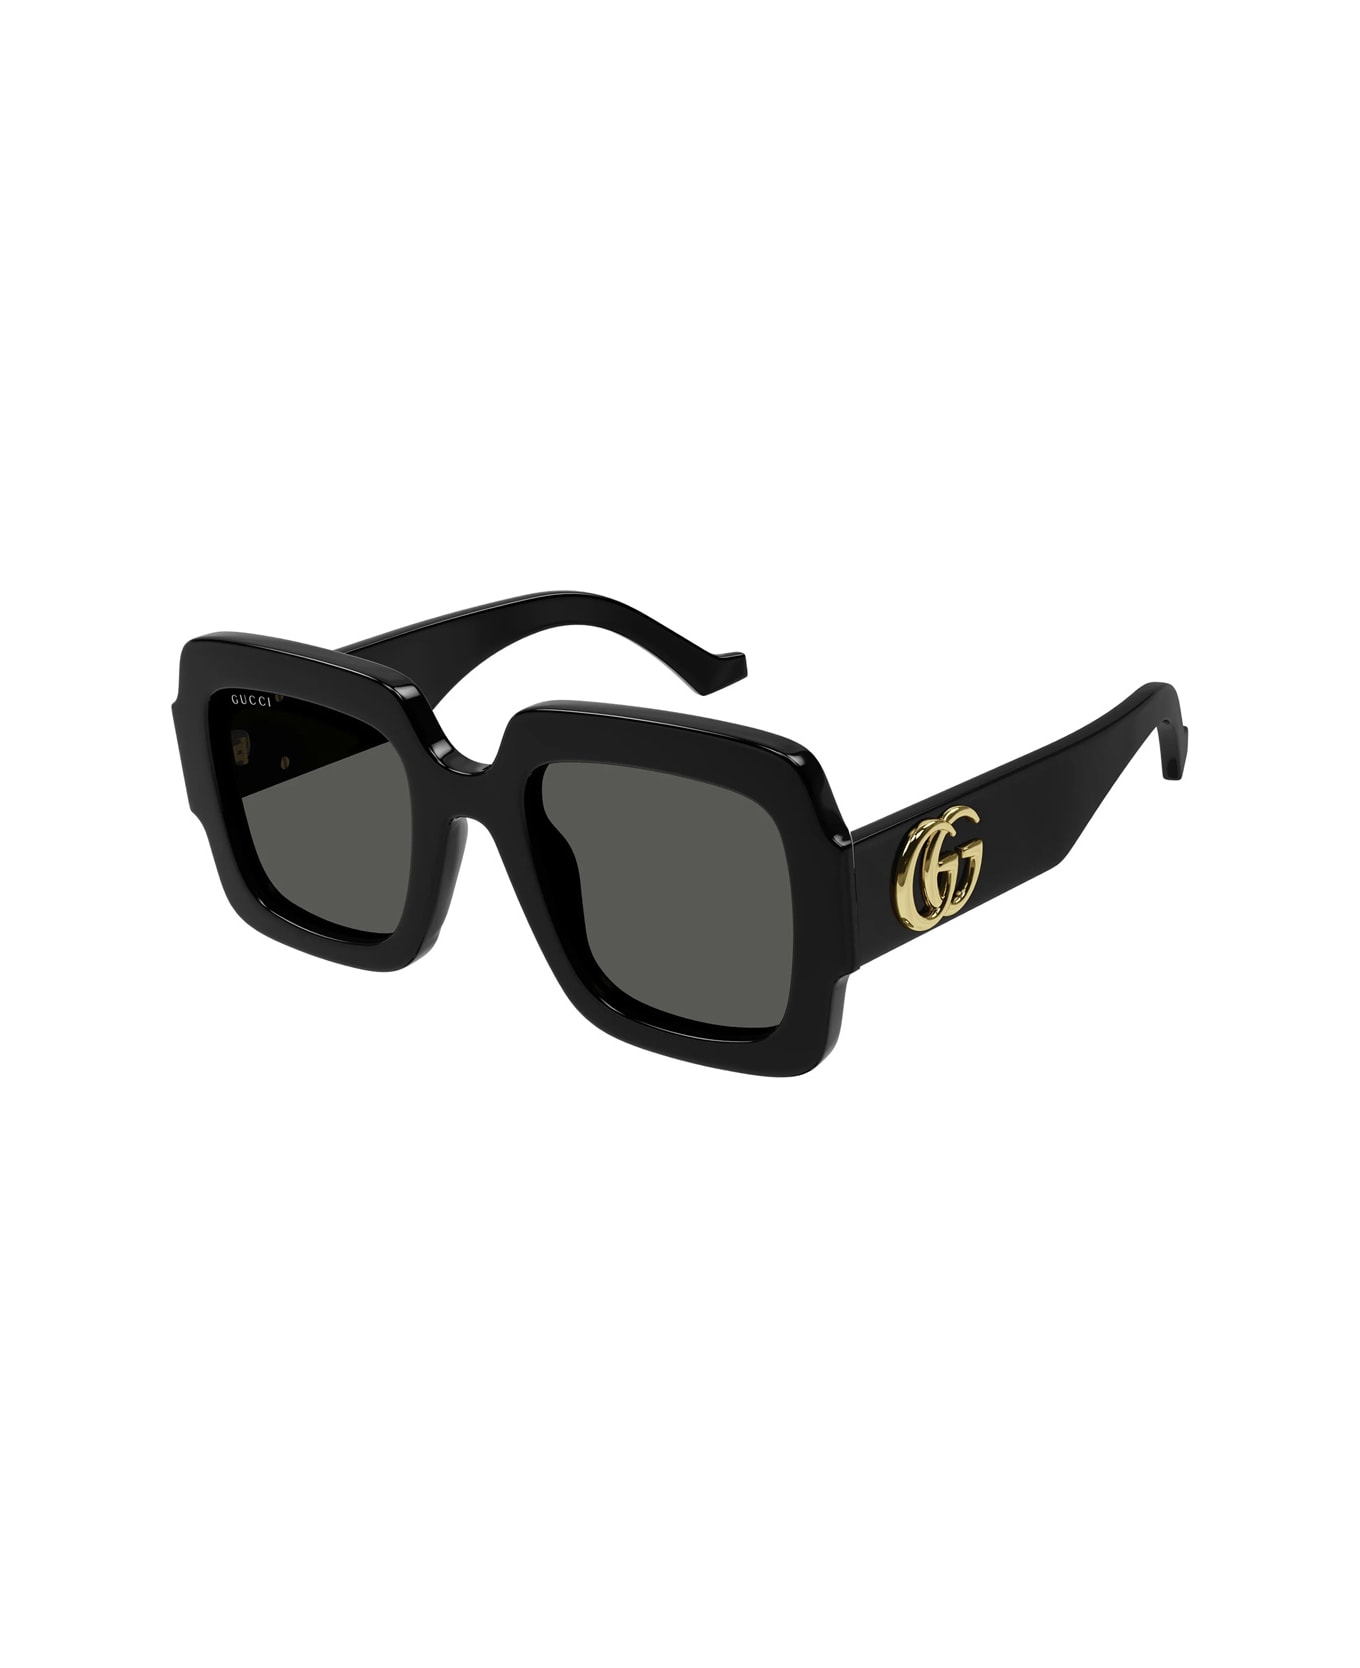 Gucci Eyewear Gg1547s 001 Sunglasses - Nero